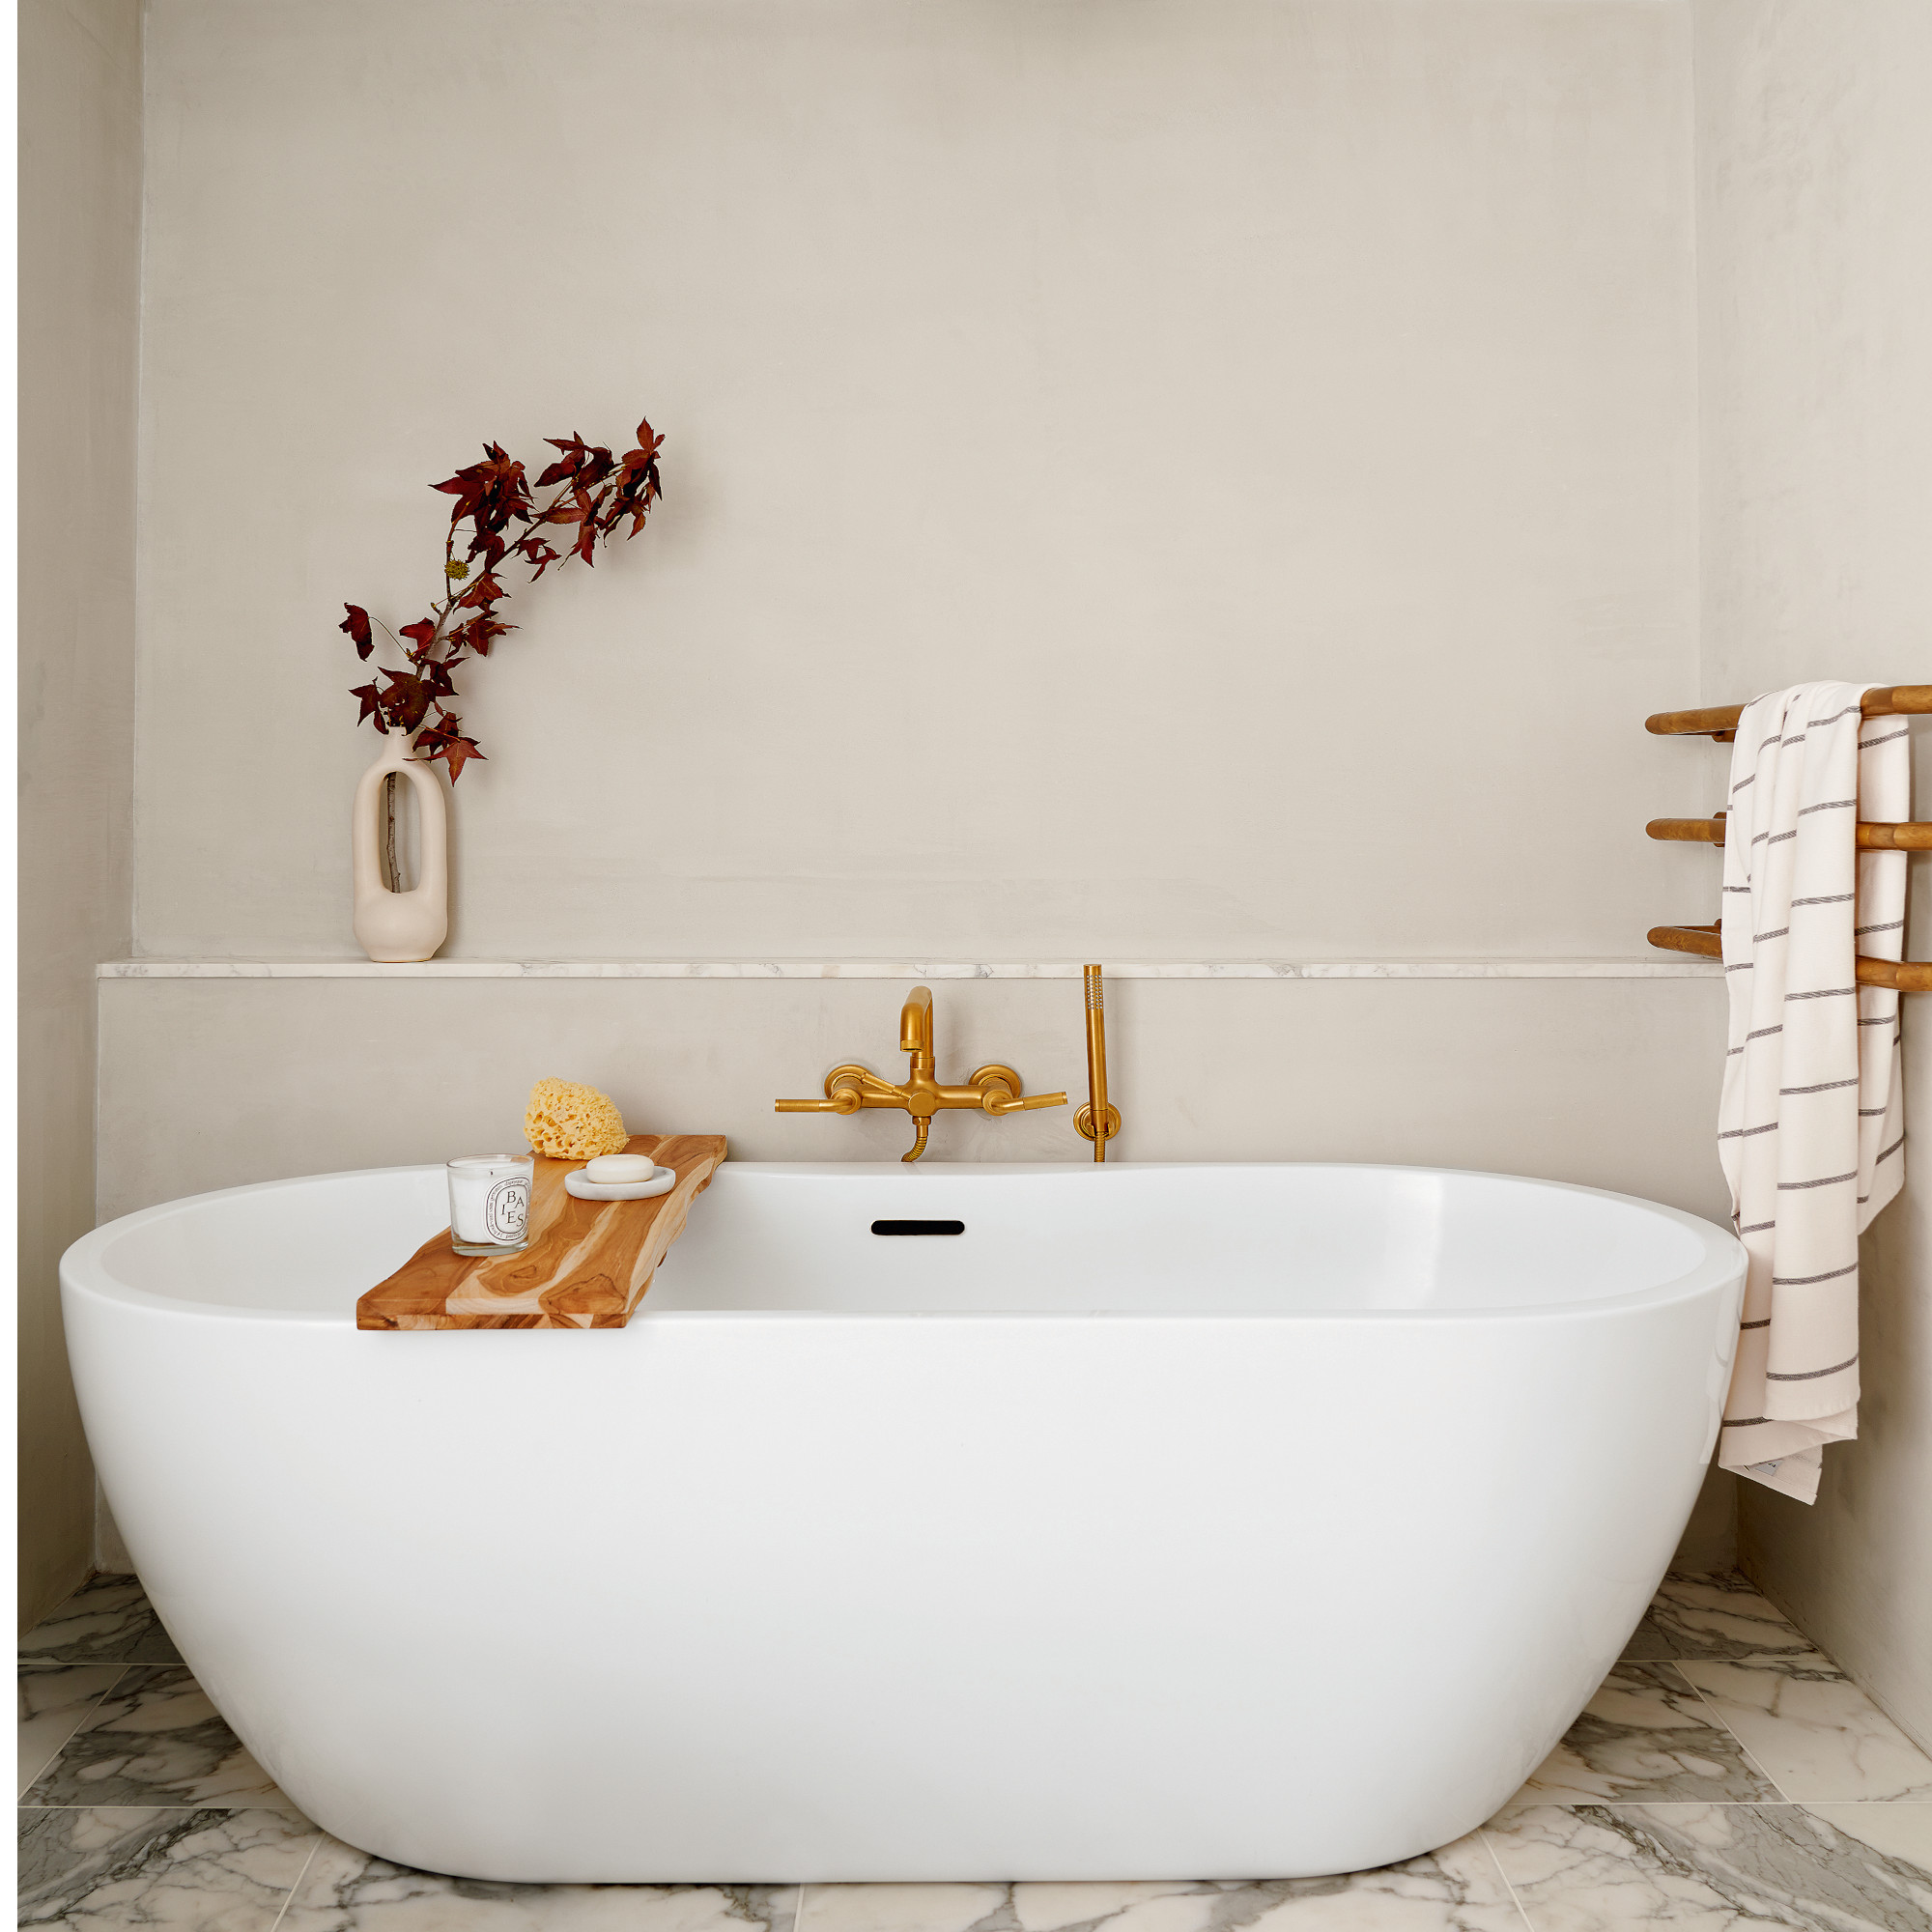 Inspiring beige bathroom ideas to inspire a spa-like space